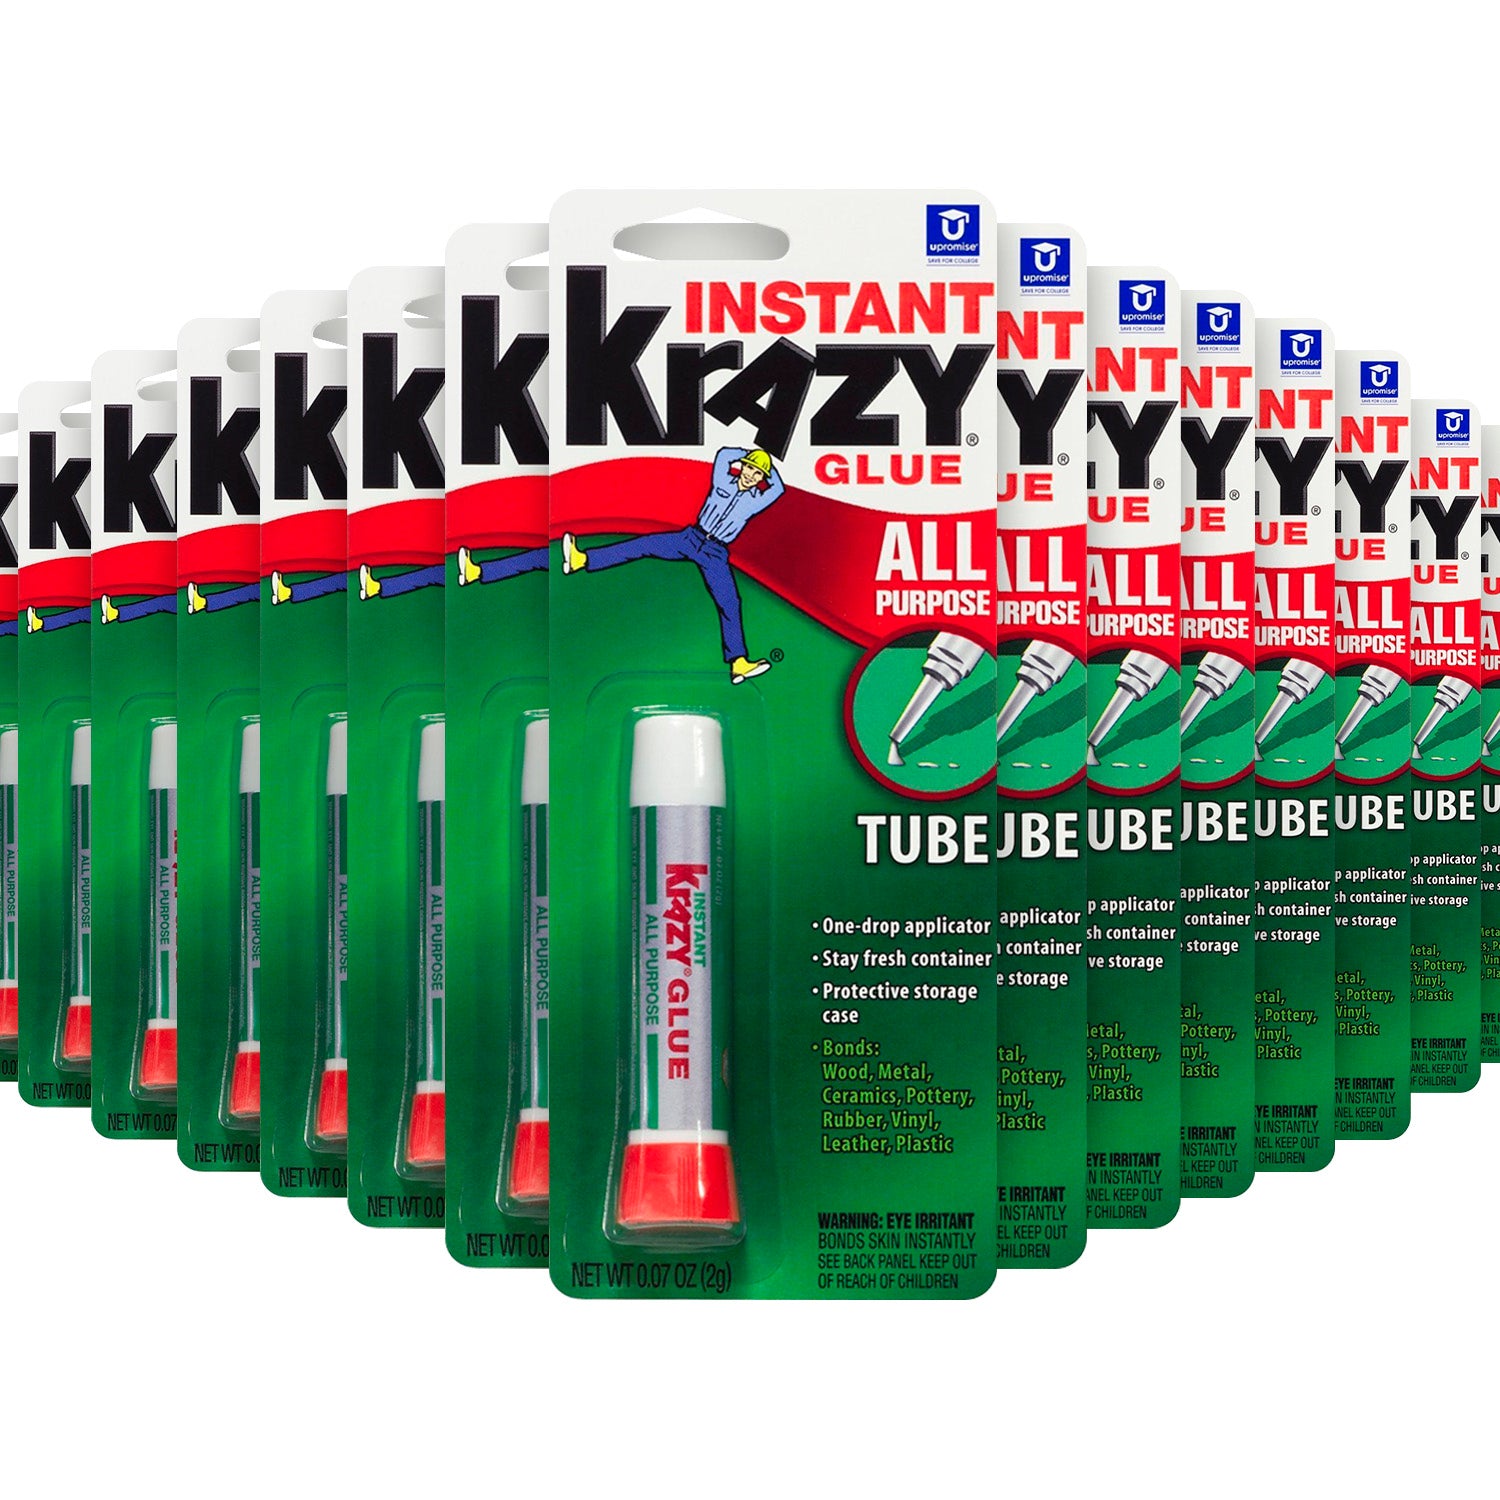 Krazy All Purpose Glue - 4 pack, 0.017 oz tubes